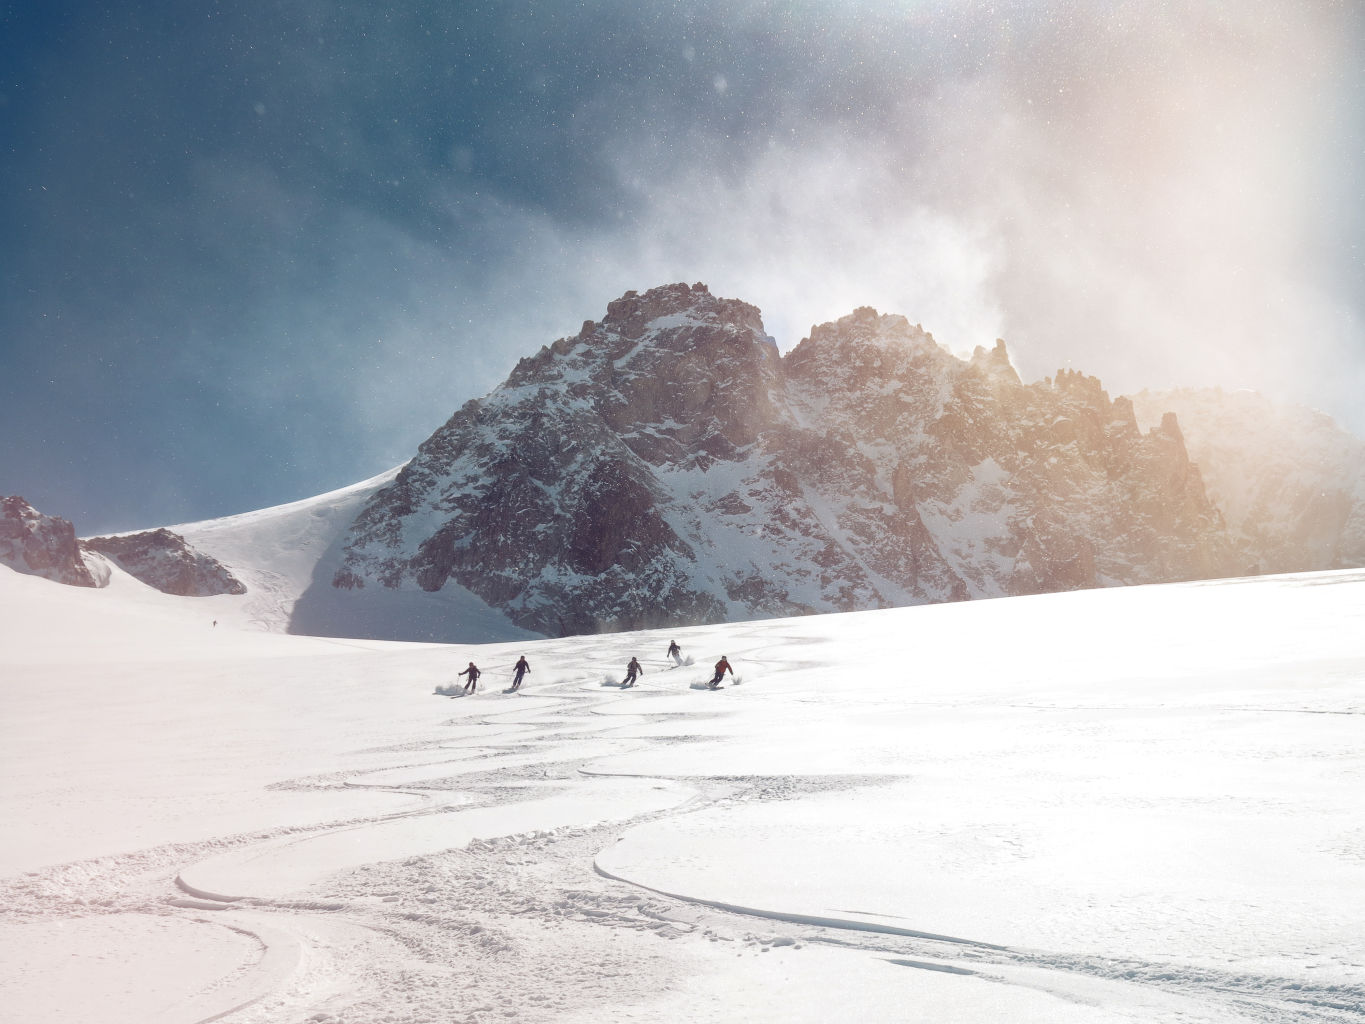 Dream freeride in powder snow on the Glacier des Grands.